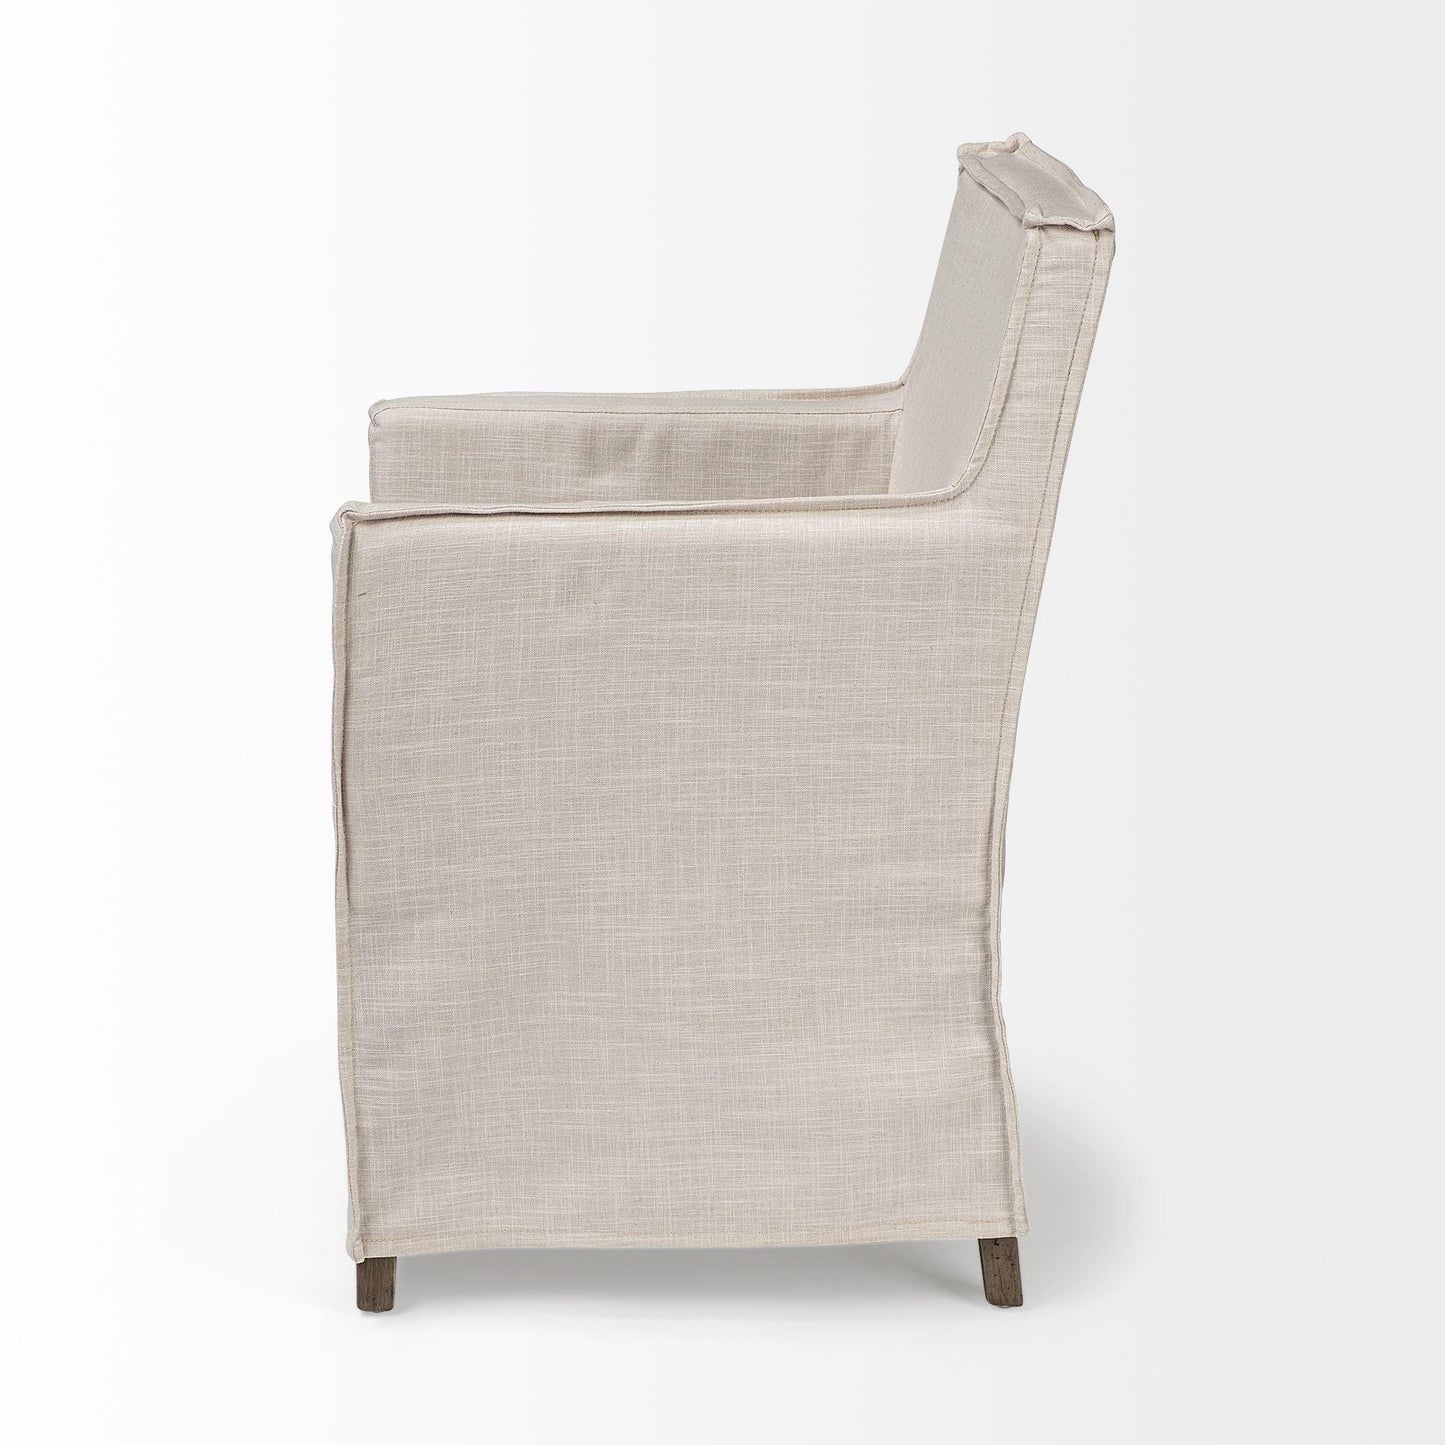 Elbert II Cream Fabric Slip-Cover Brown Wood Frame Dining Chair